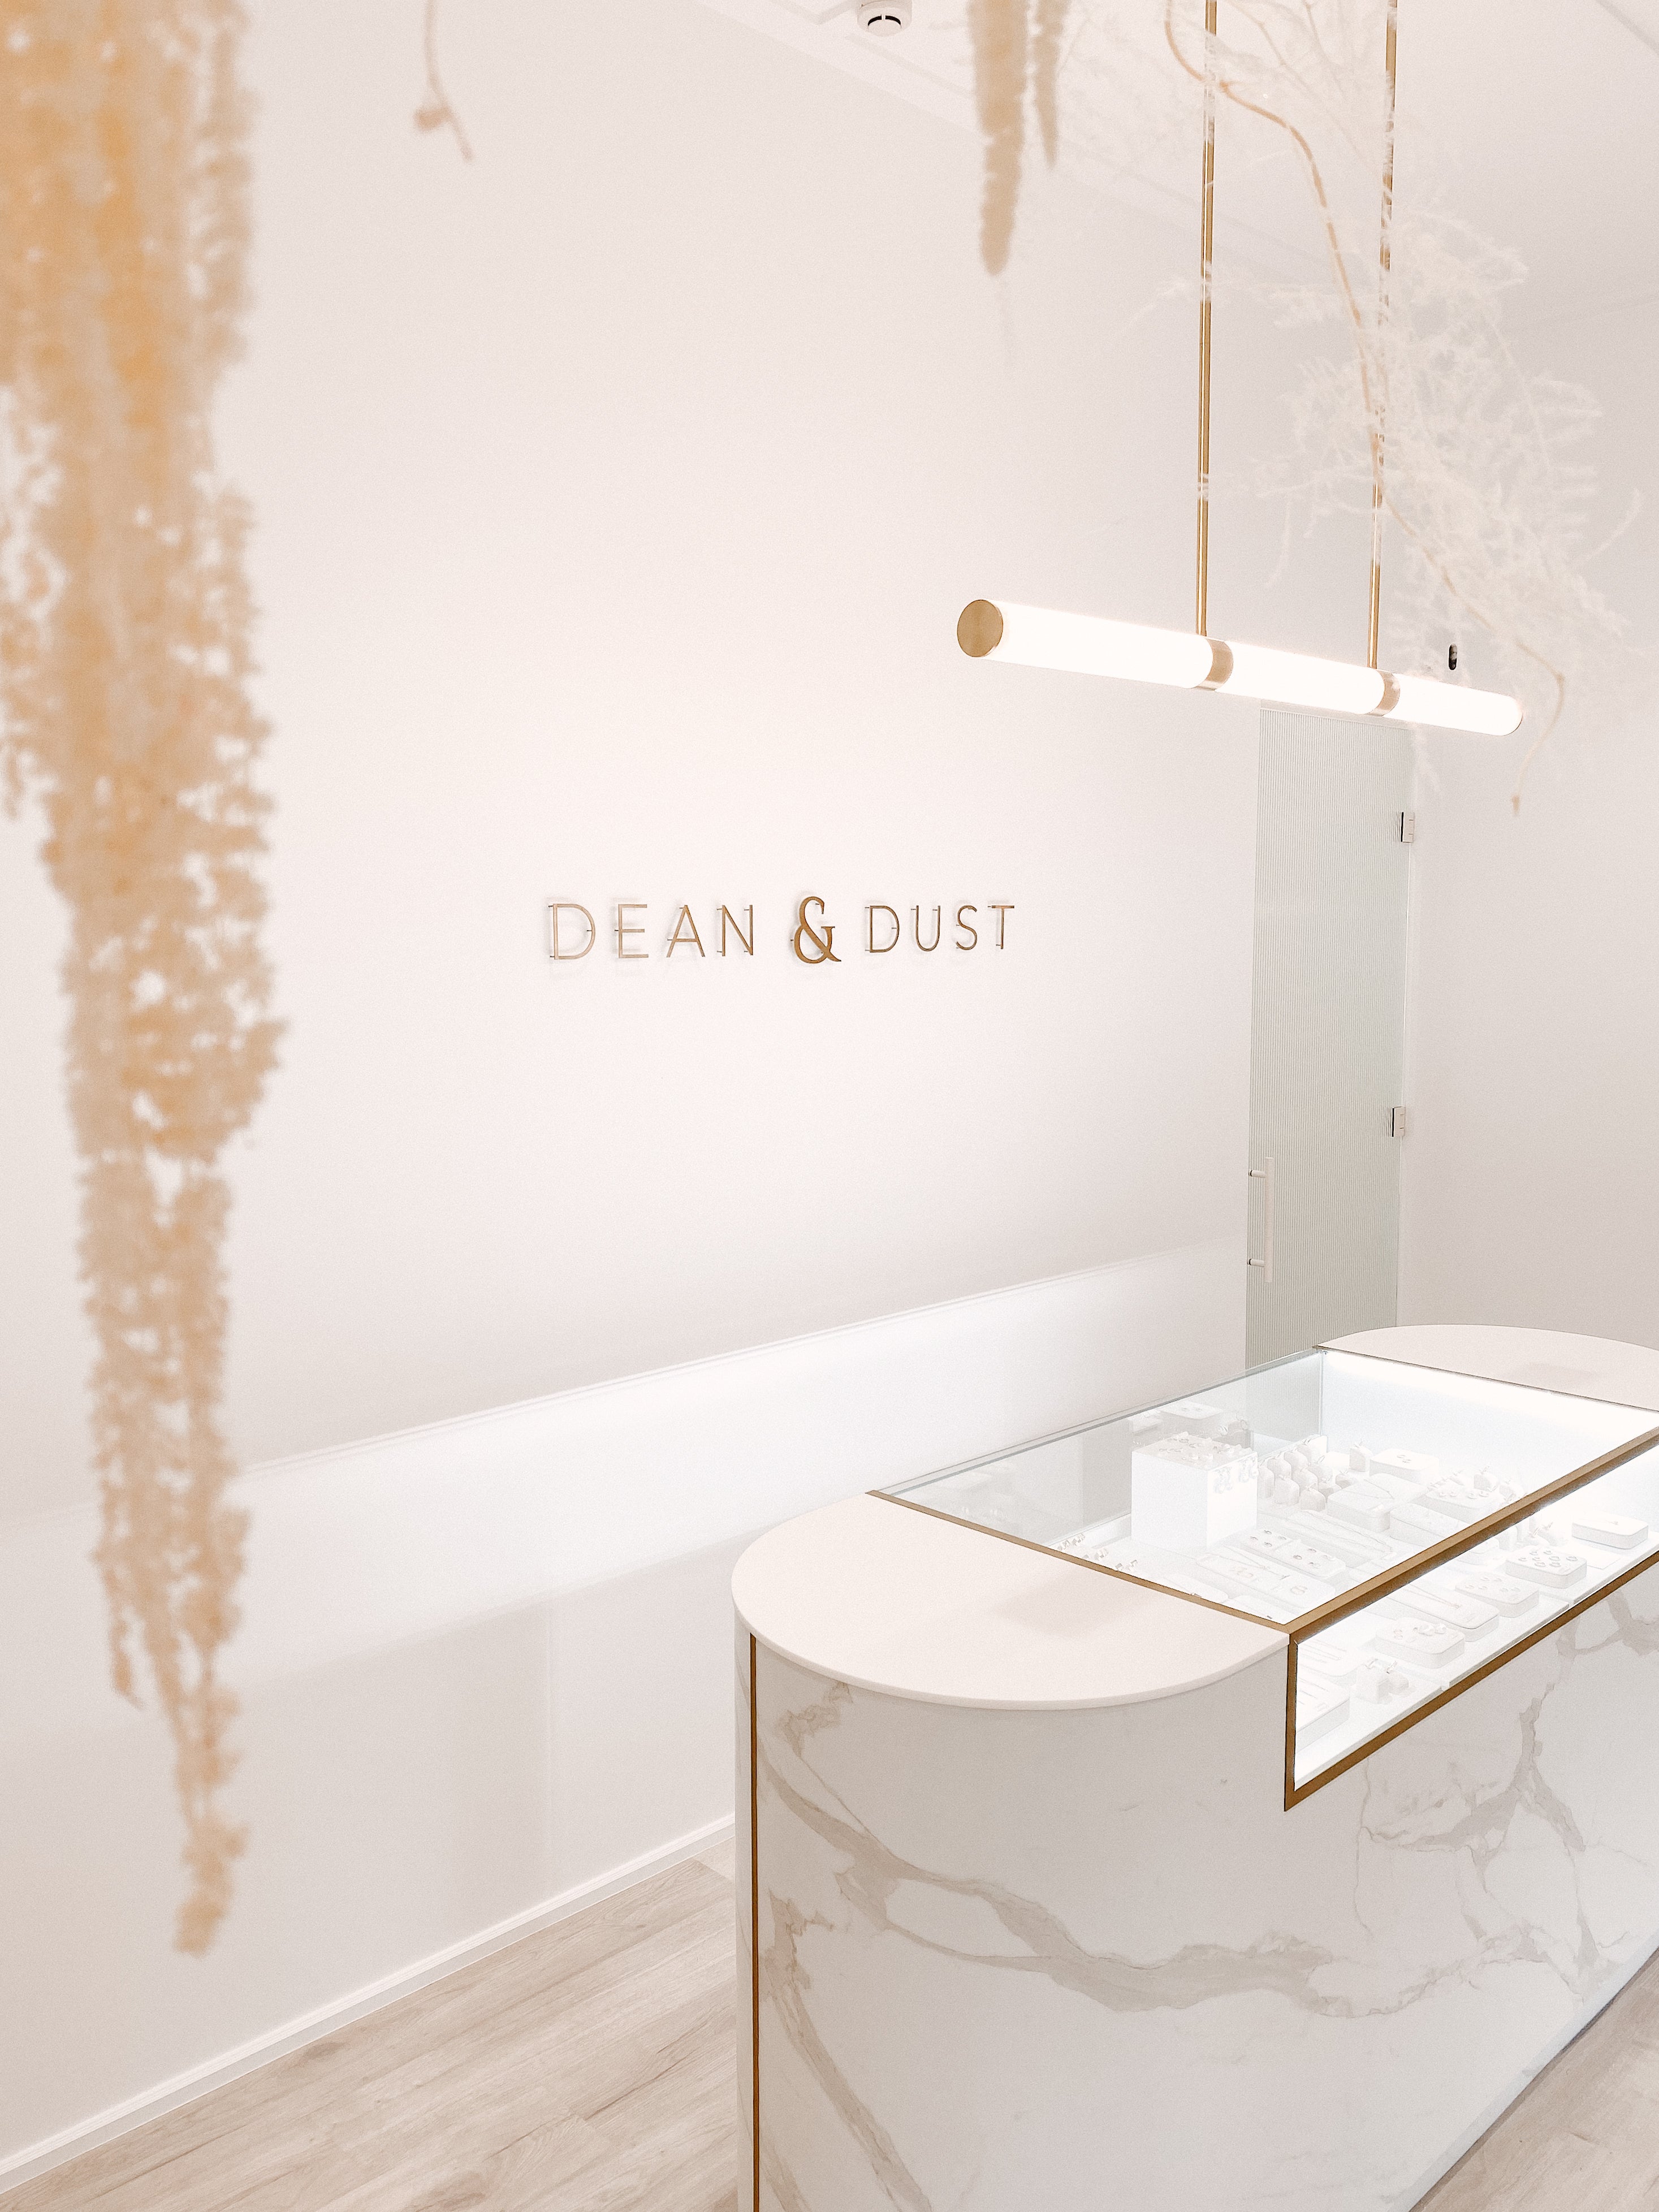 Dean & Dust Jewellery Store - Whangarei - Northland - Jewellery Design - Bespoke Design